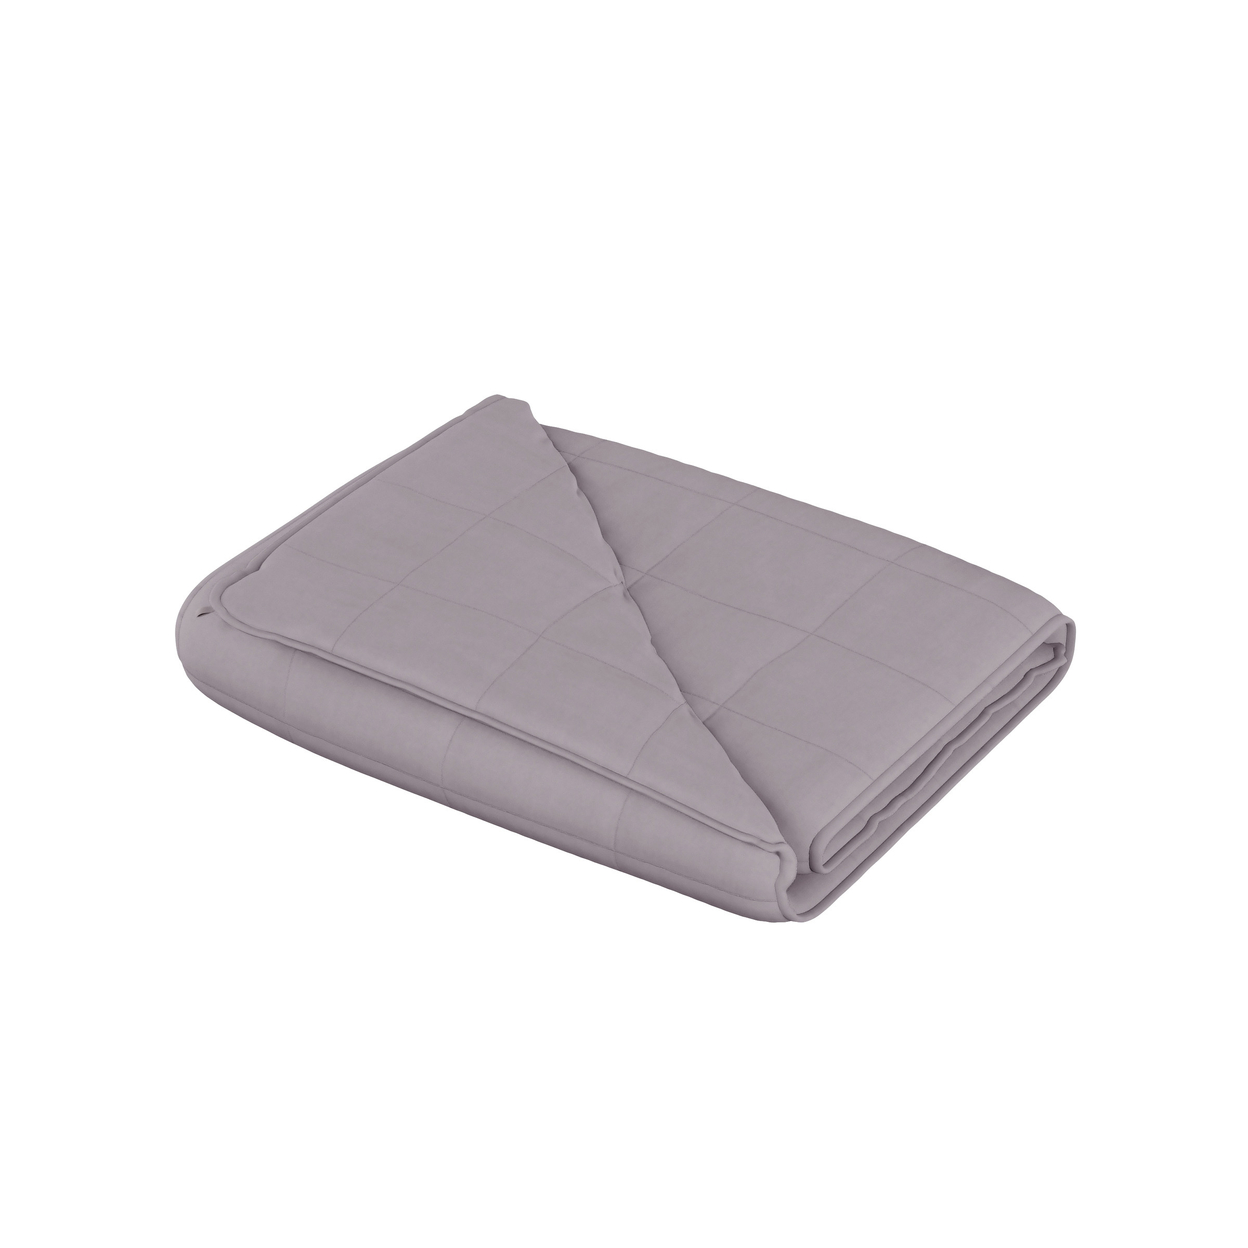 Weighted 10lb Throw Blanket 90-125lbs-Cotton 41x60 Glass Bead Sleep Aid, Gray